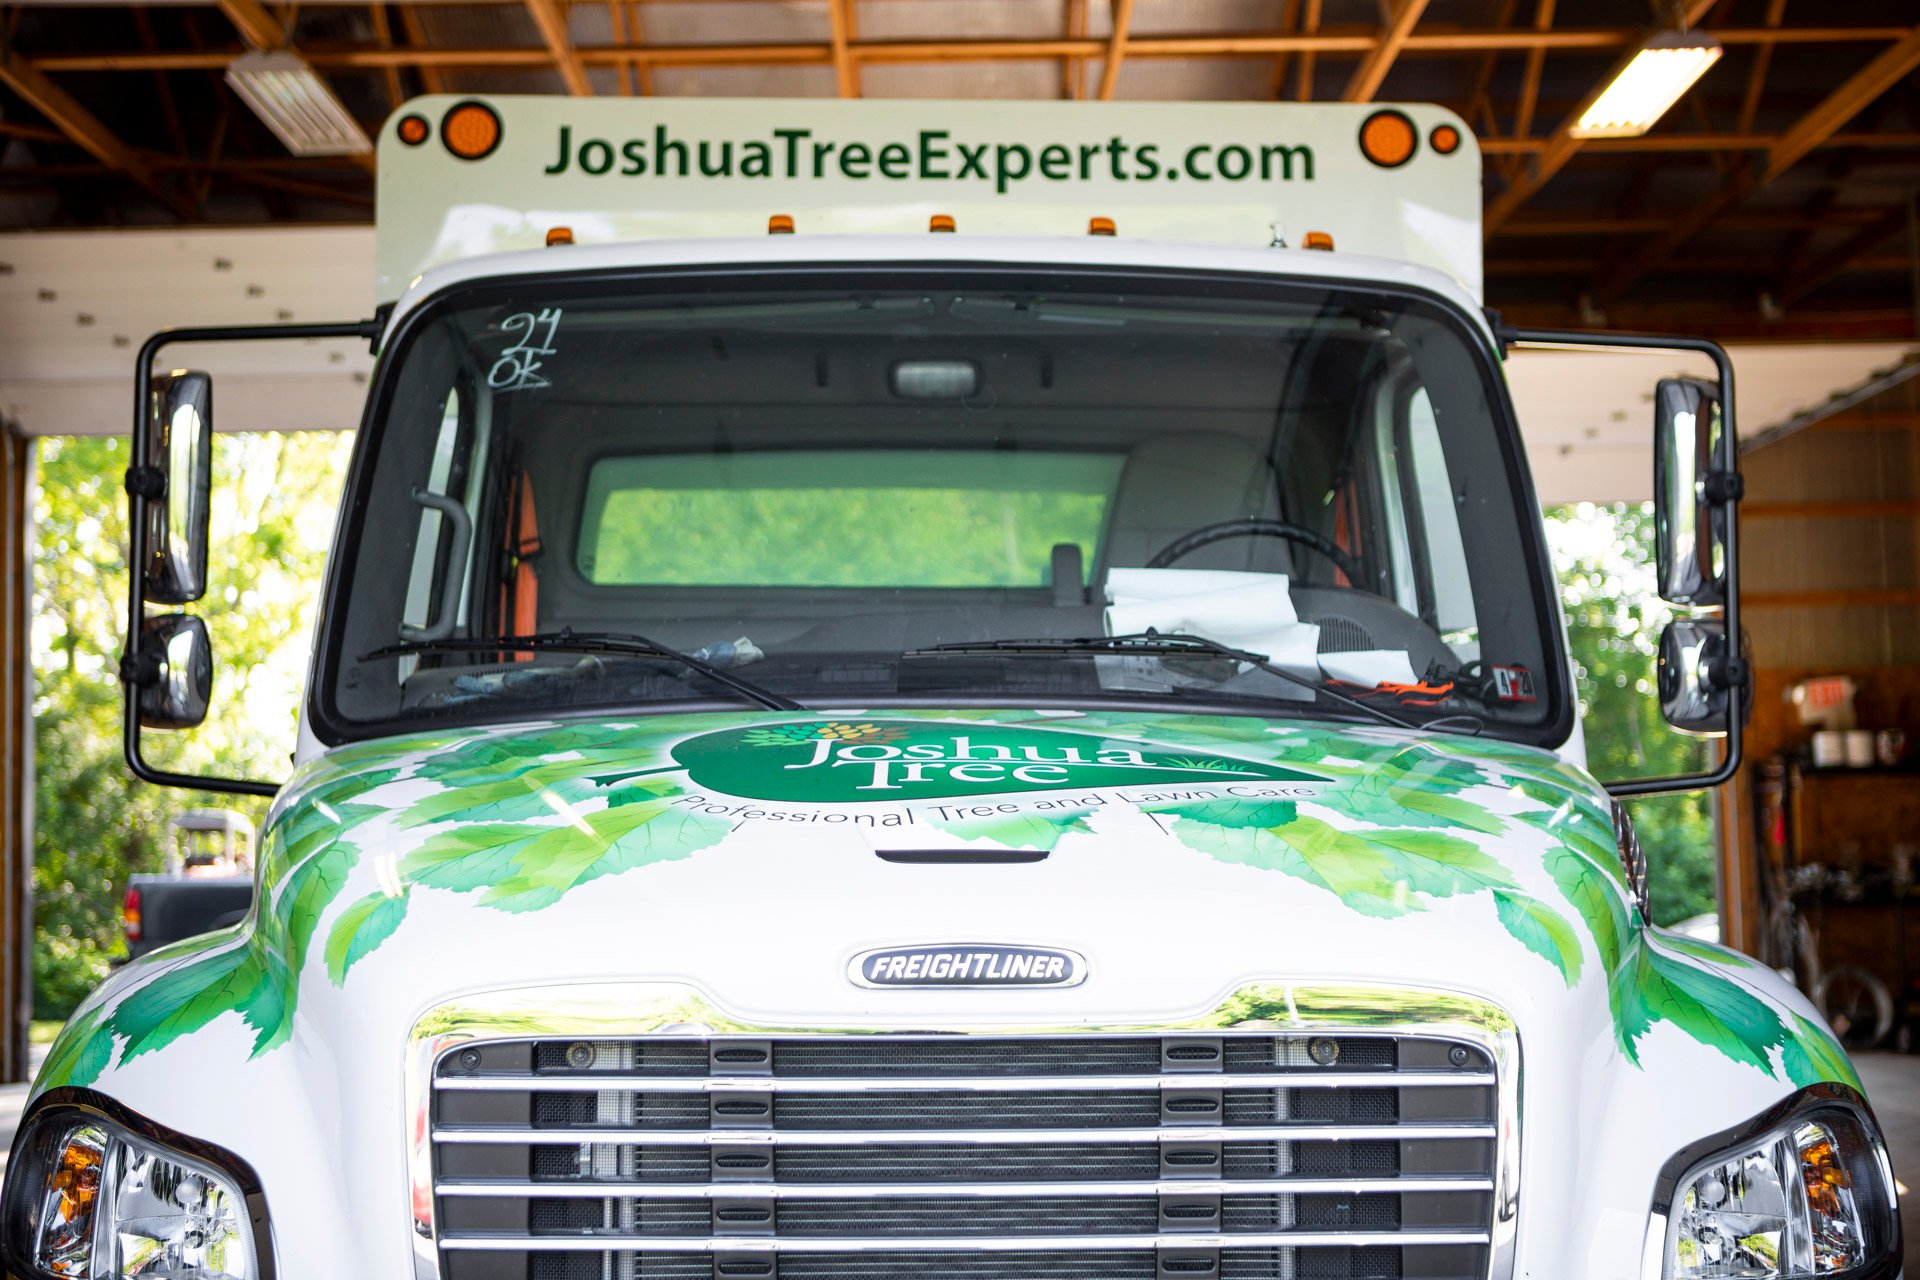 joshua tree truck with website